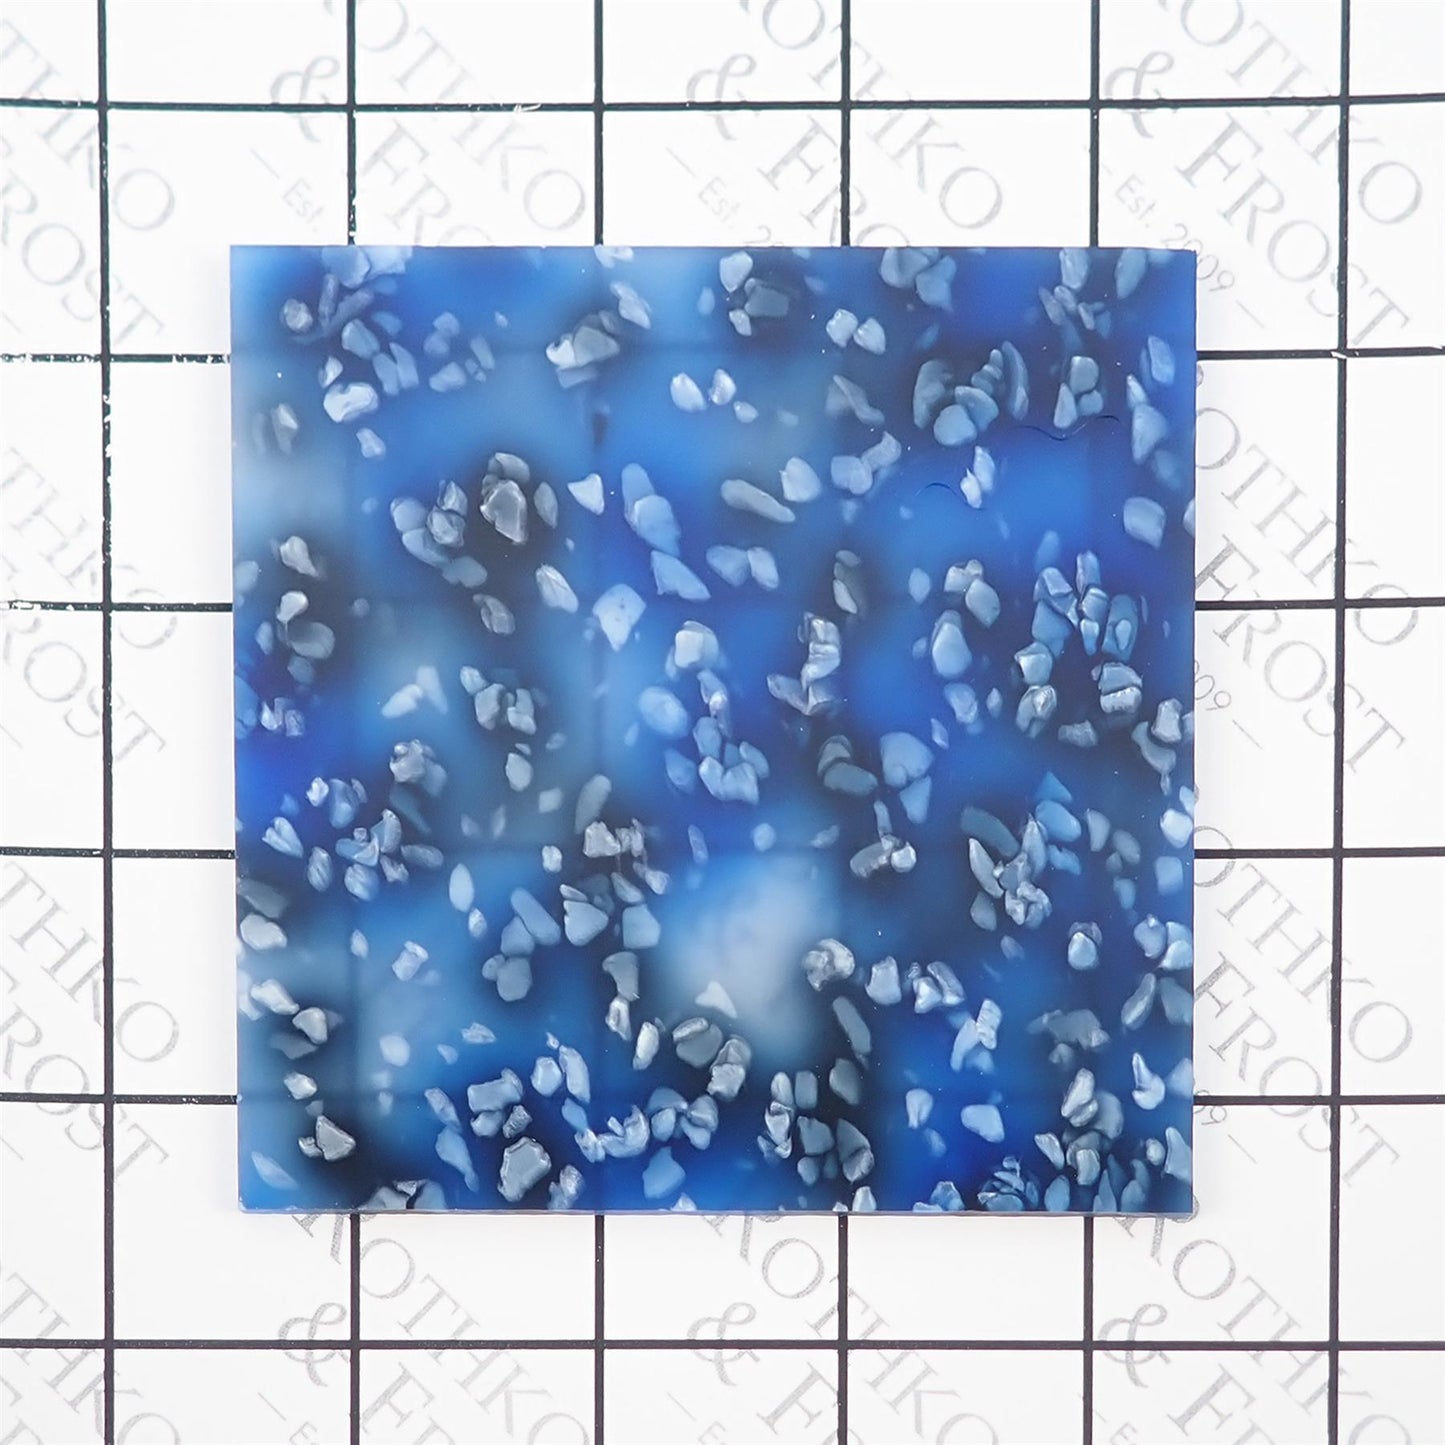 Incudo Blue Crystal Acrylic Sheet - 300x200x3mm (11.8x7.87x0.12")